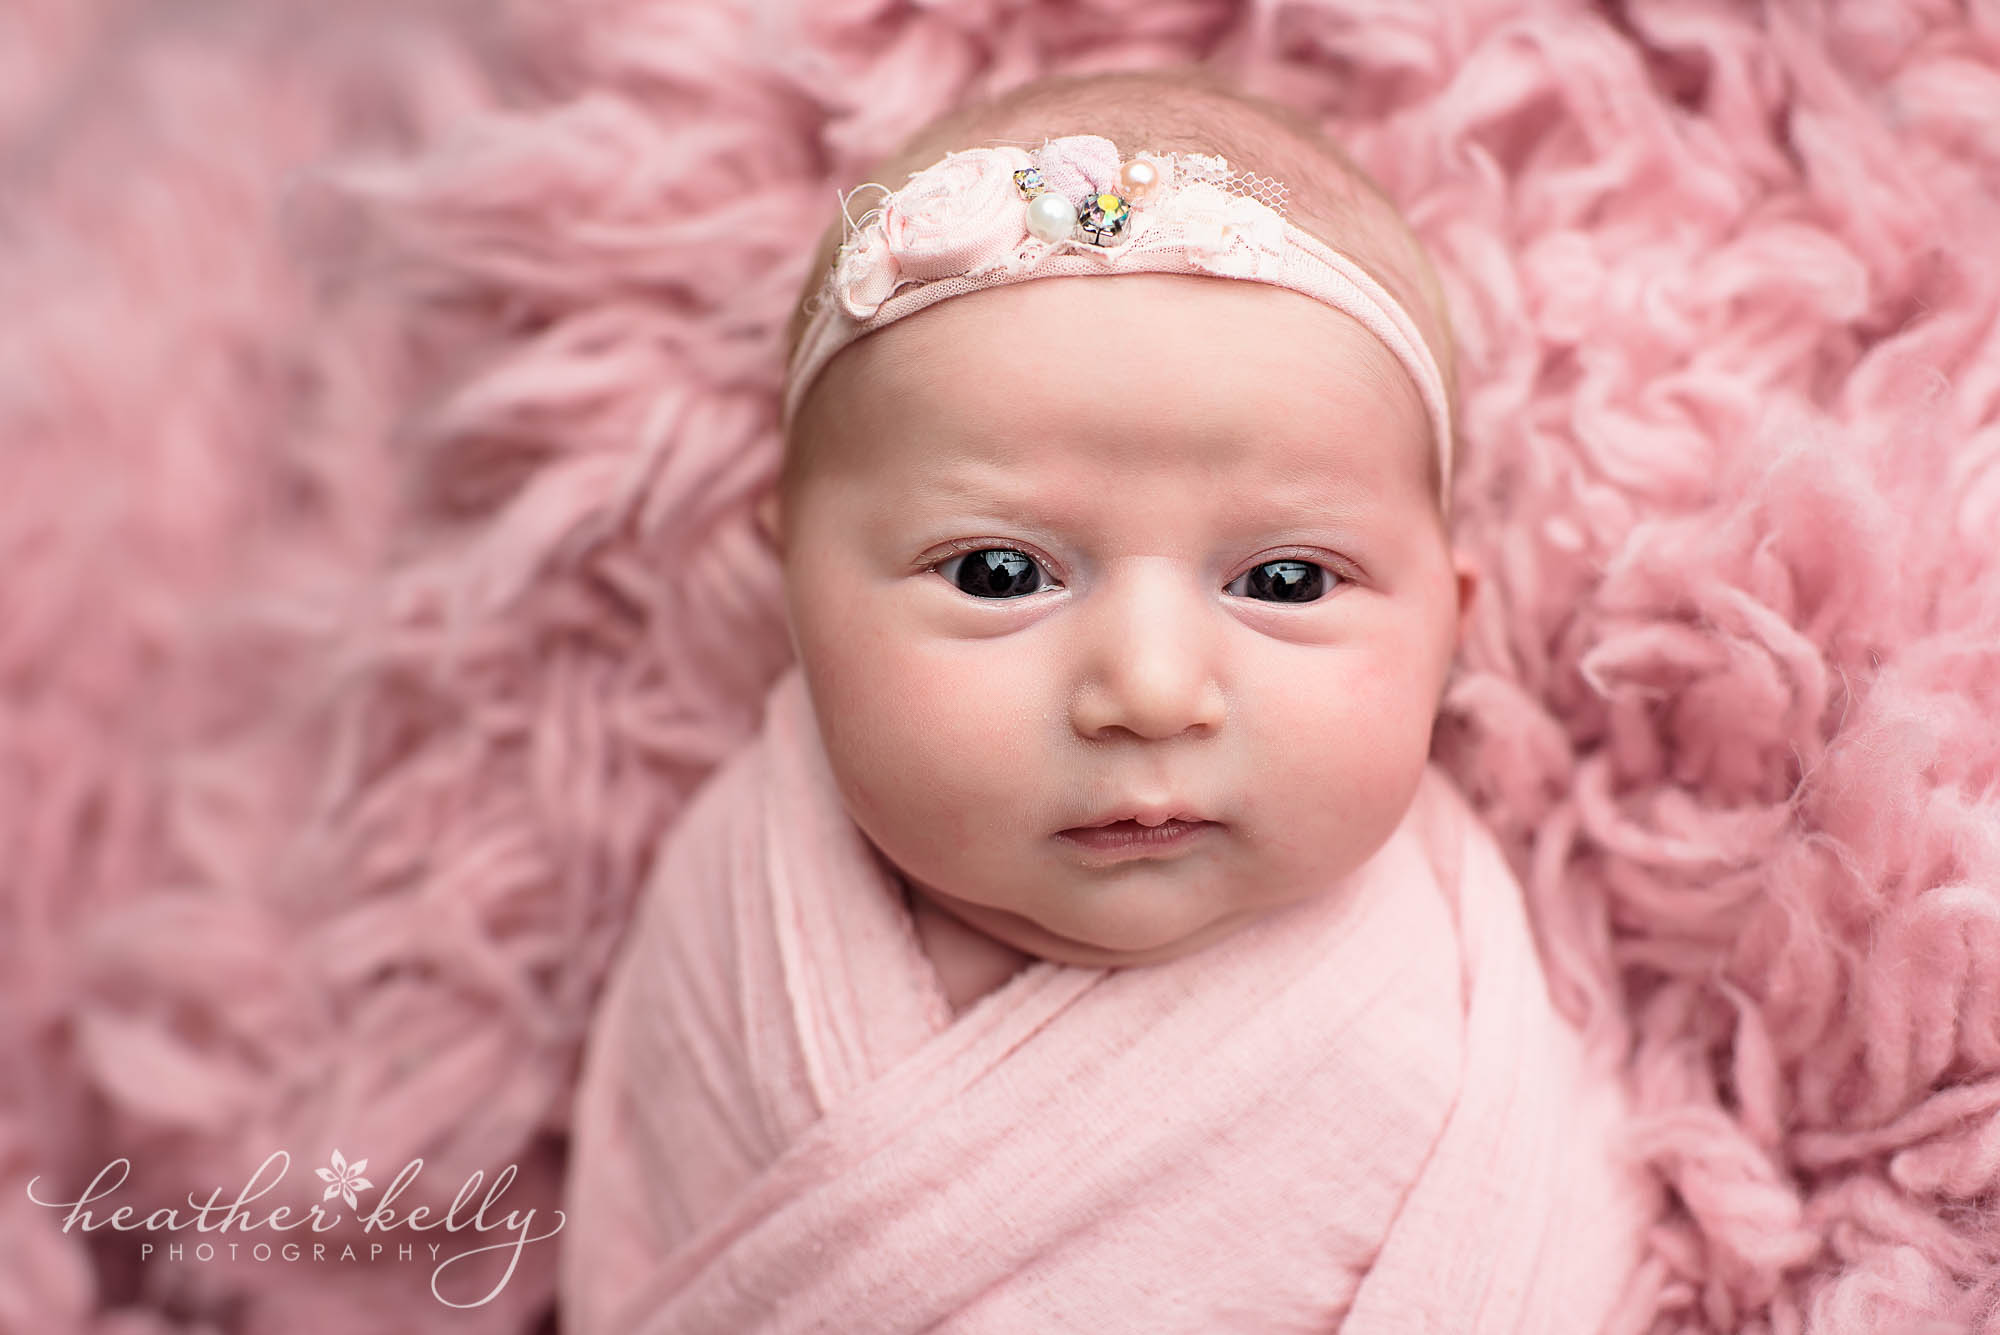 awake close up pink newborn girl. newtown newborn girl. ct photography